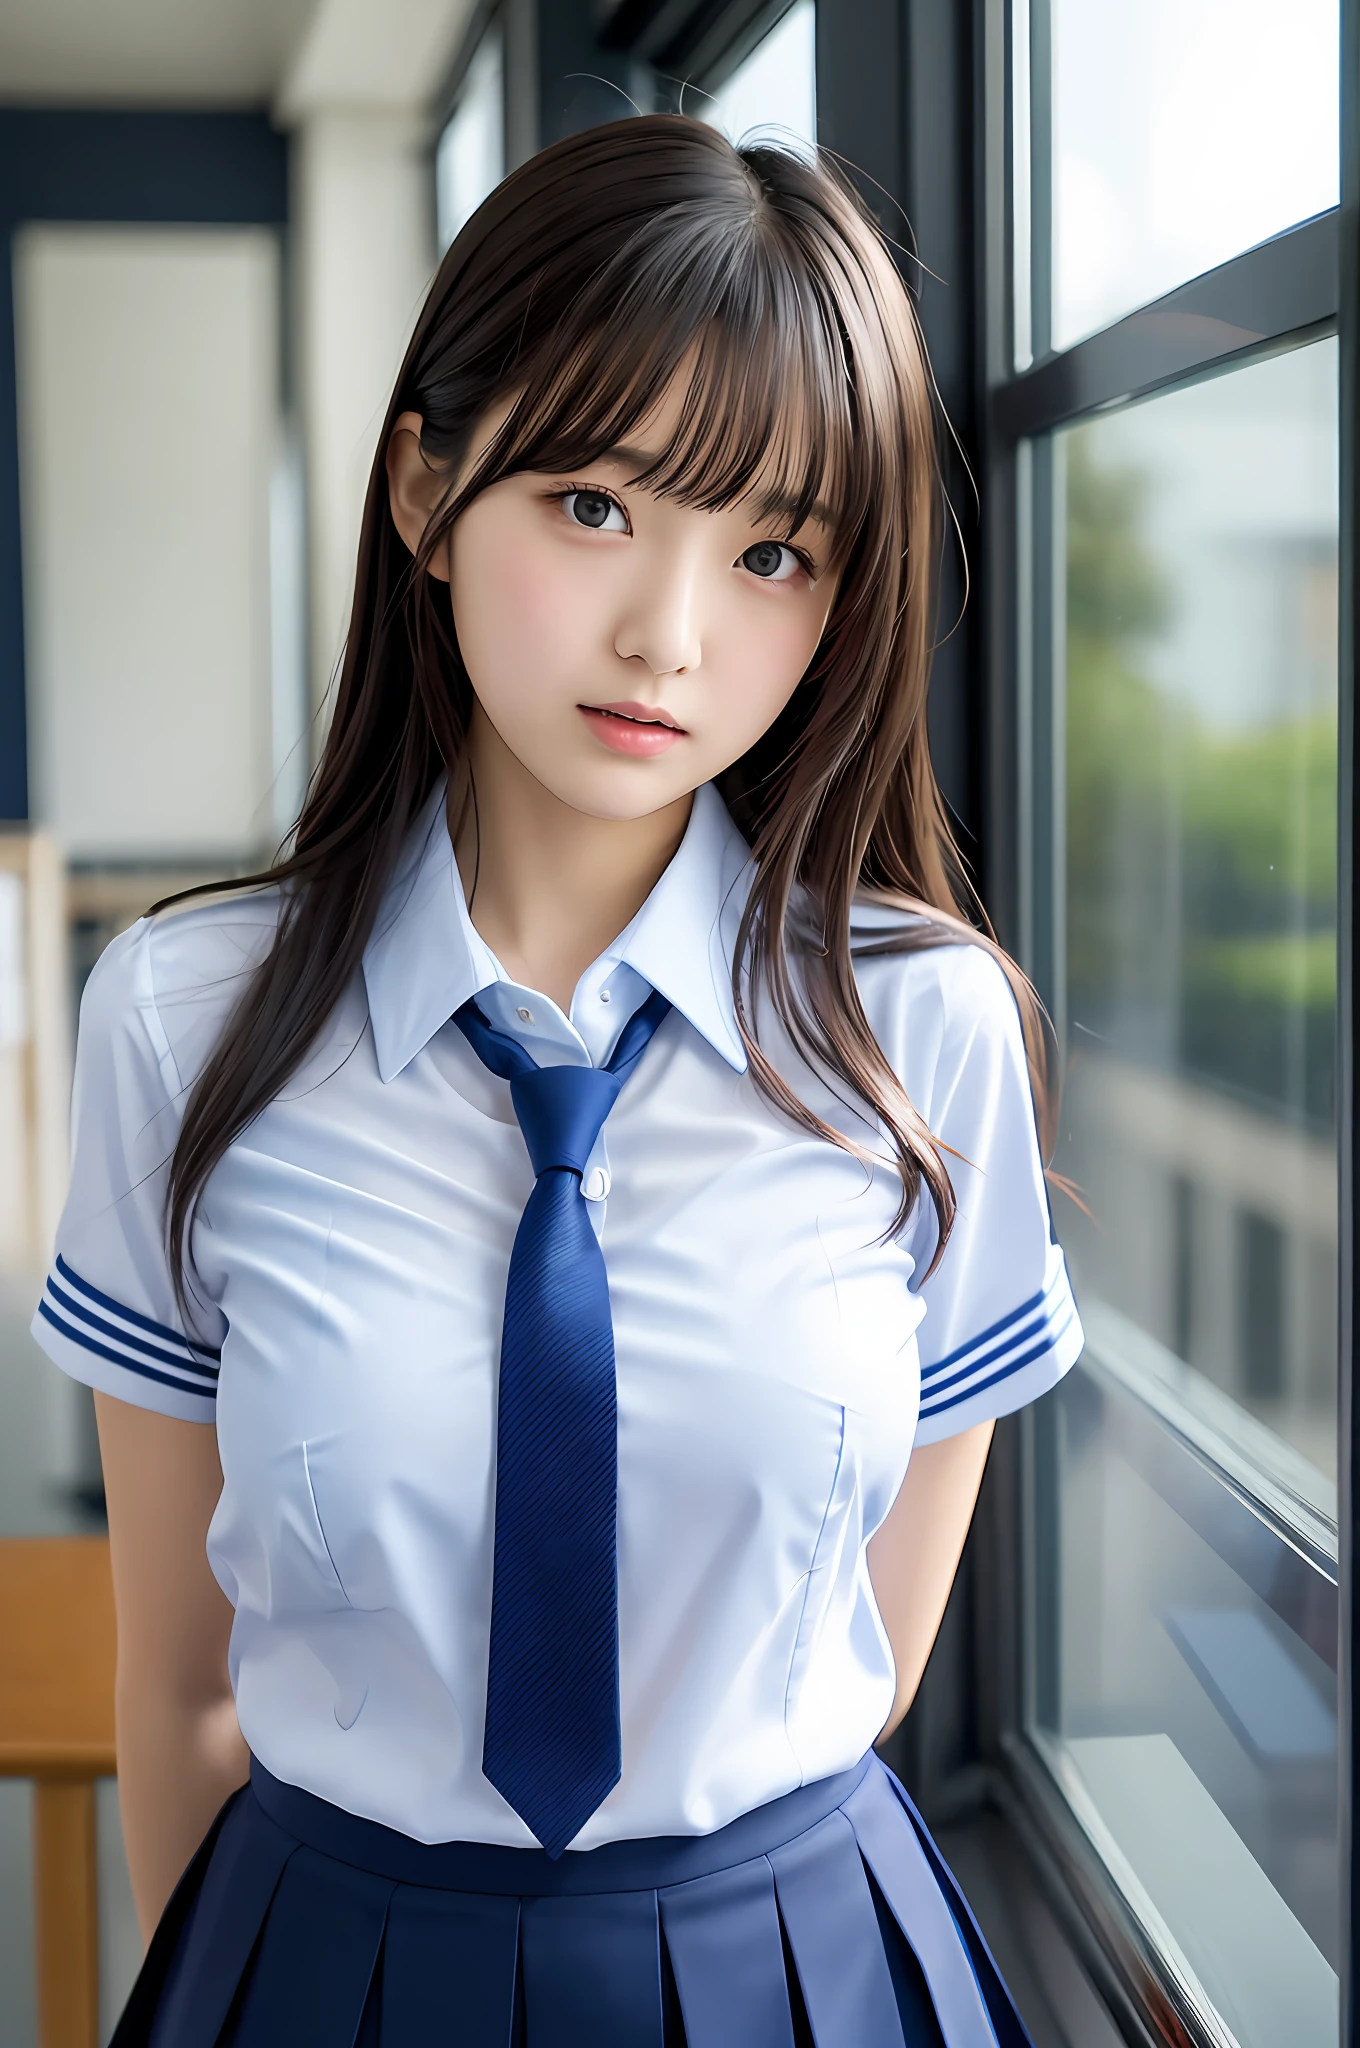 Japan girl, teenage girl, perfect figure, transparency, modest breasts, , navy blue tie, navy blue skirt, light blue shirt, gravure idol